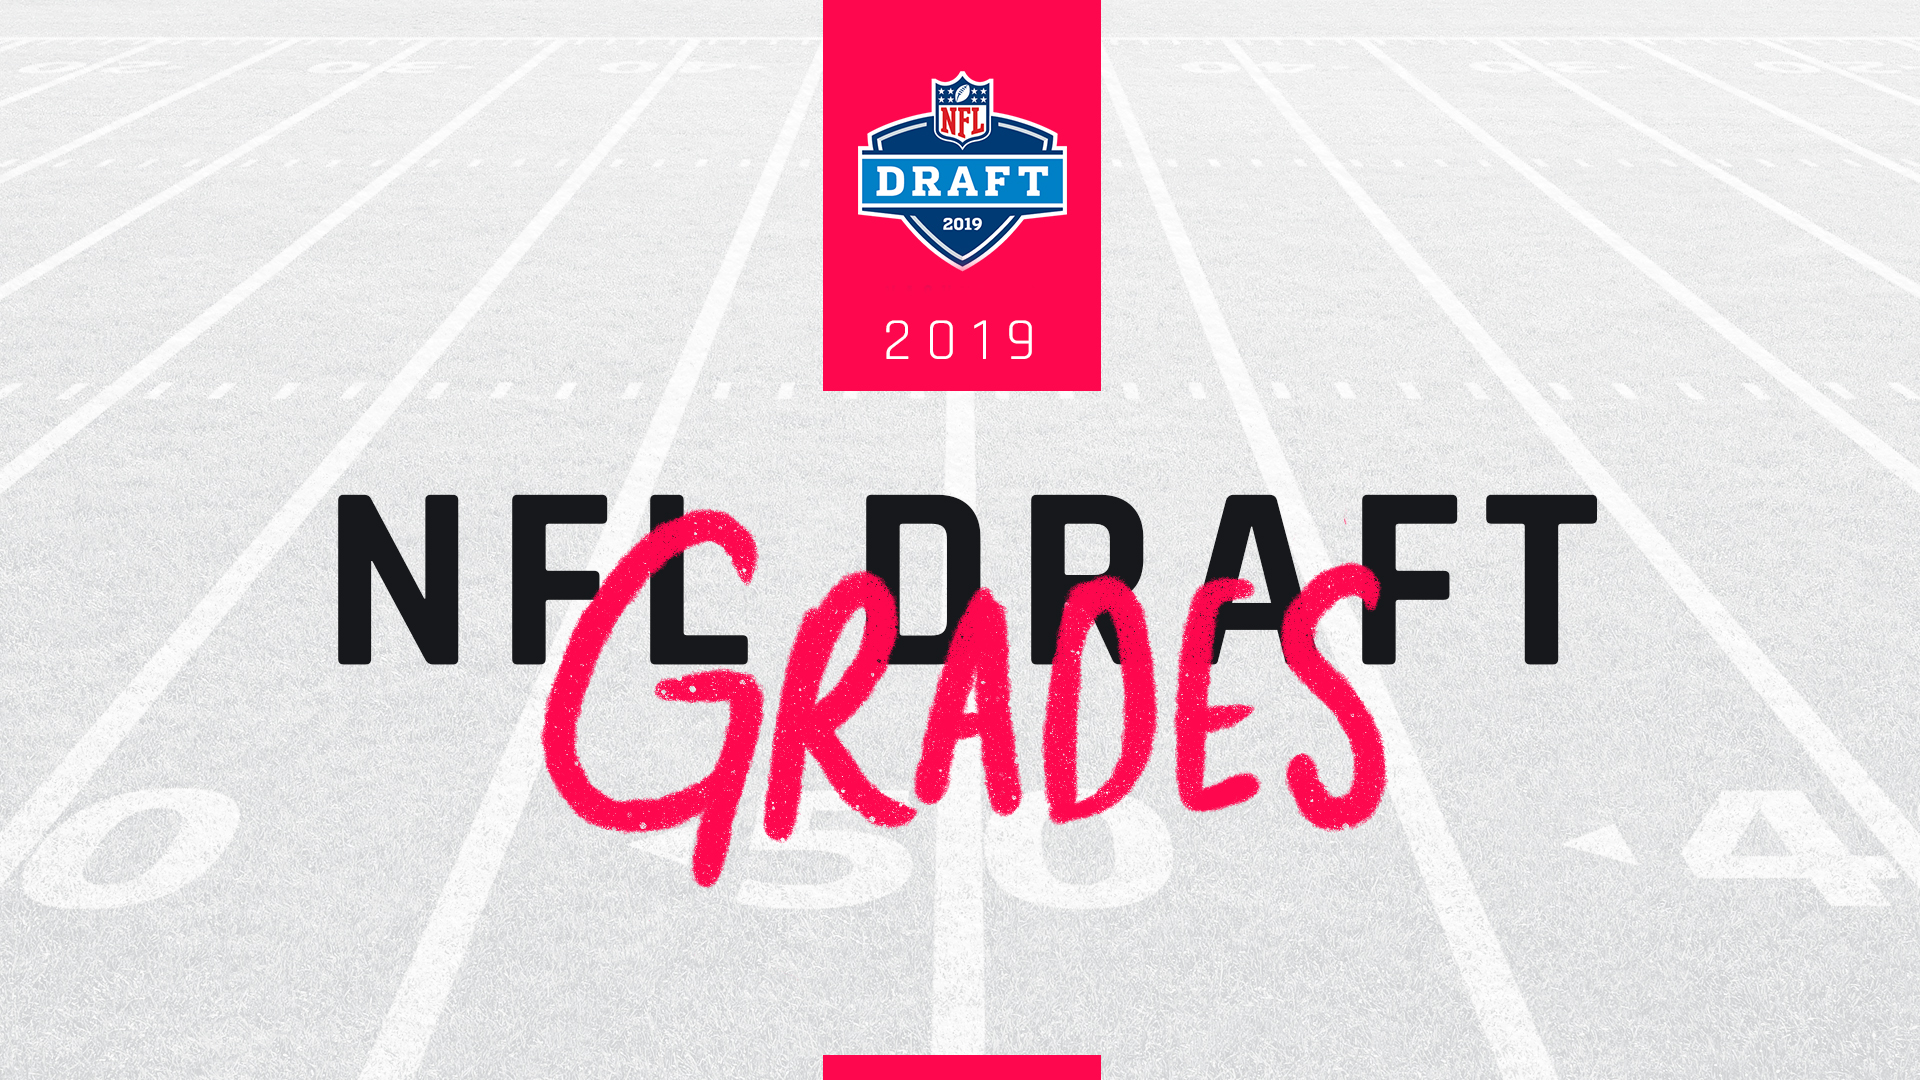 NFL Draft grades: Ranking the best, worst 2019 draft classes 1-32